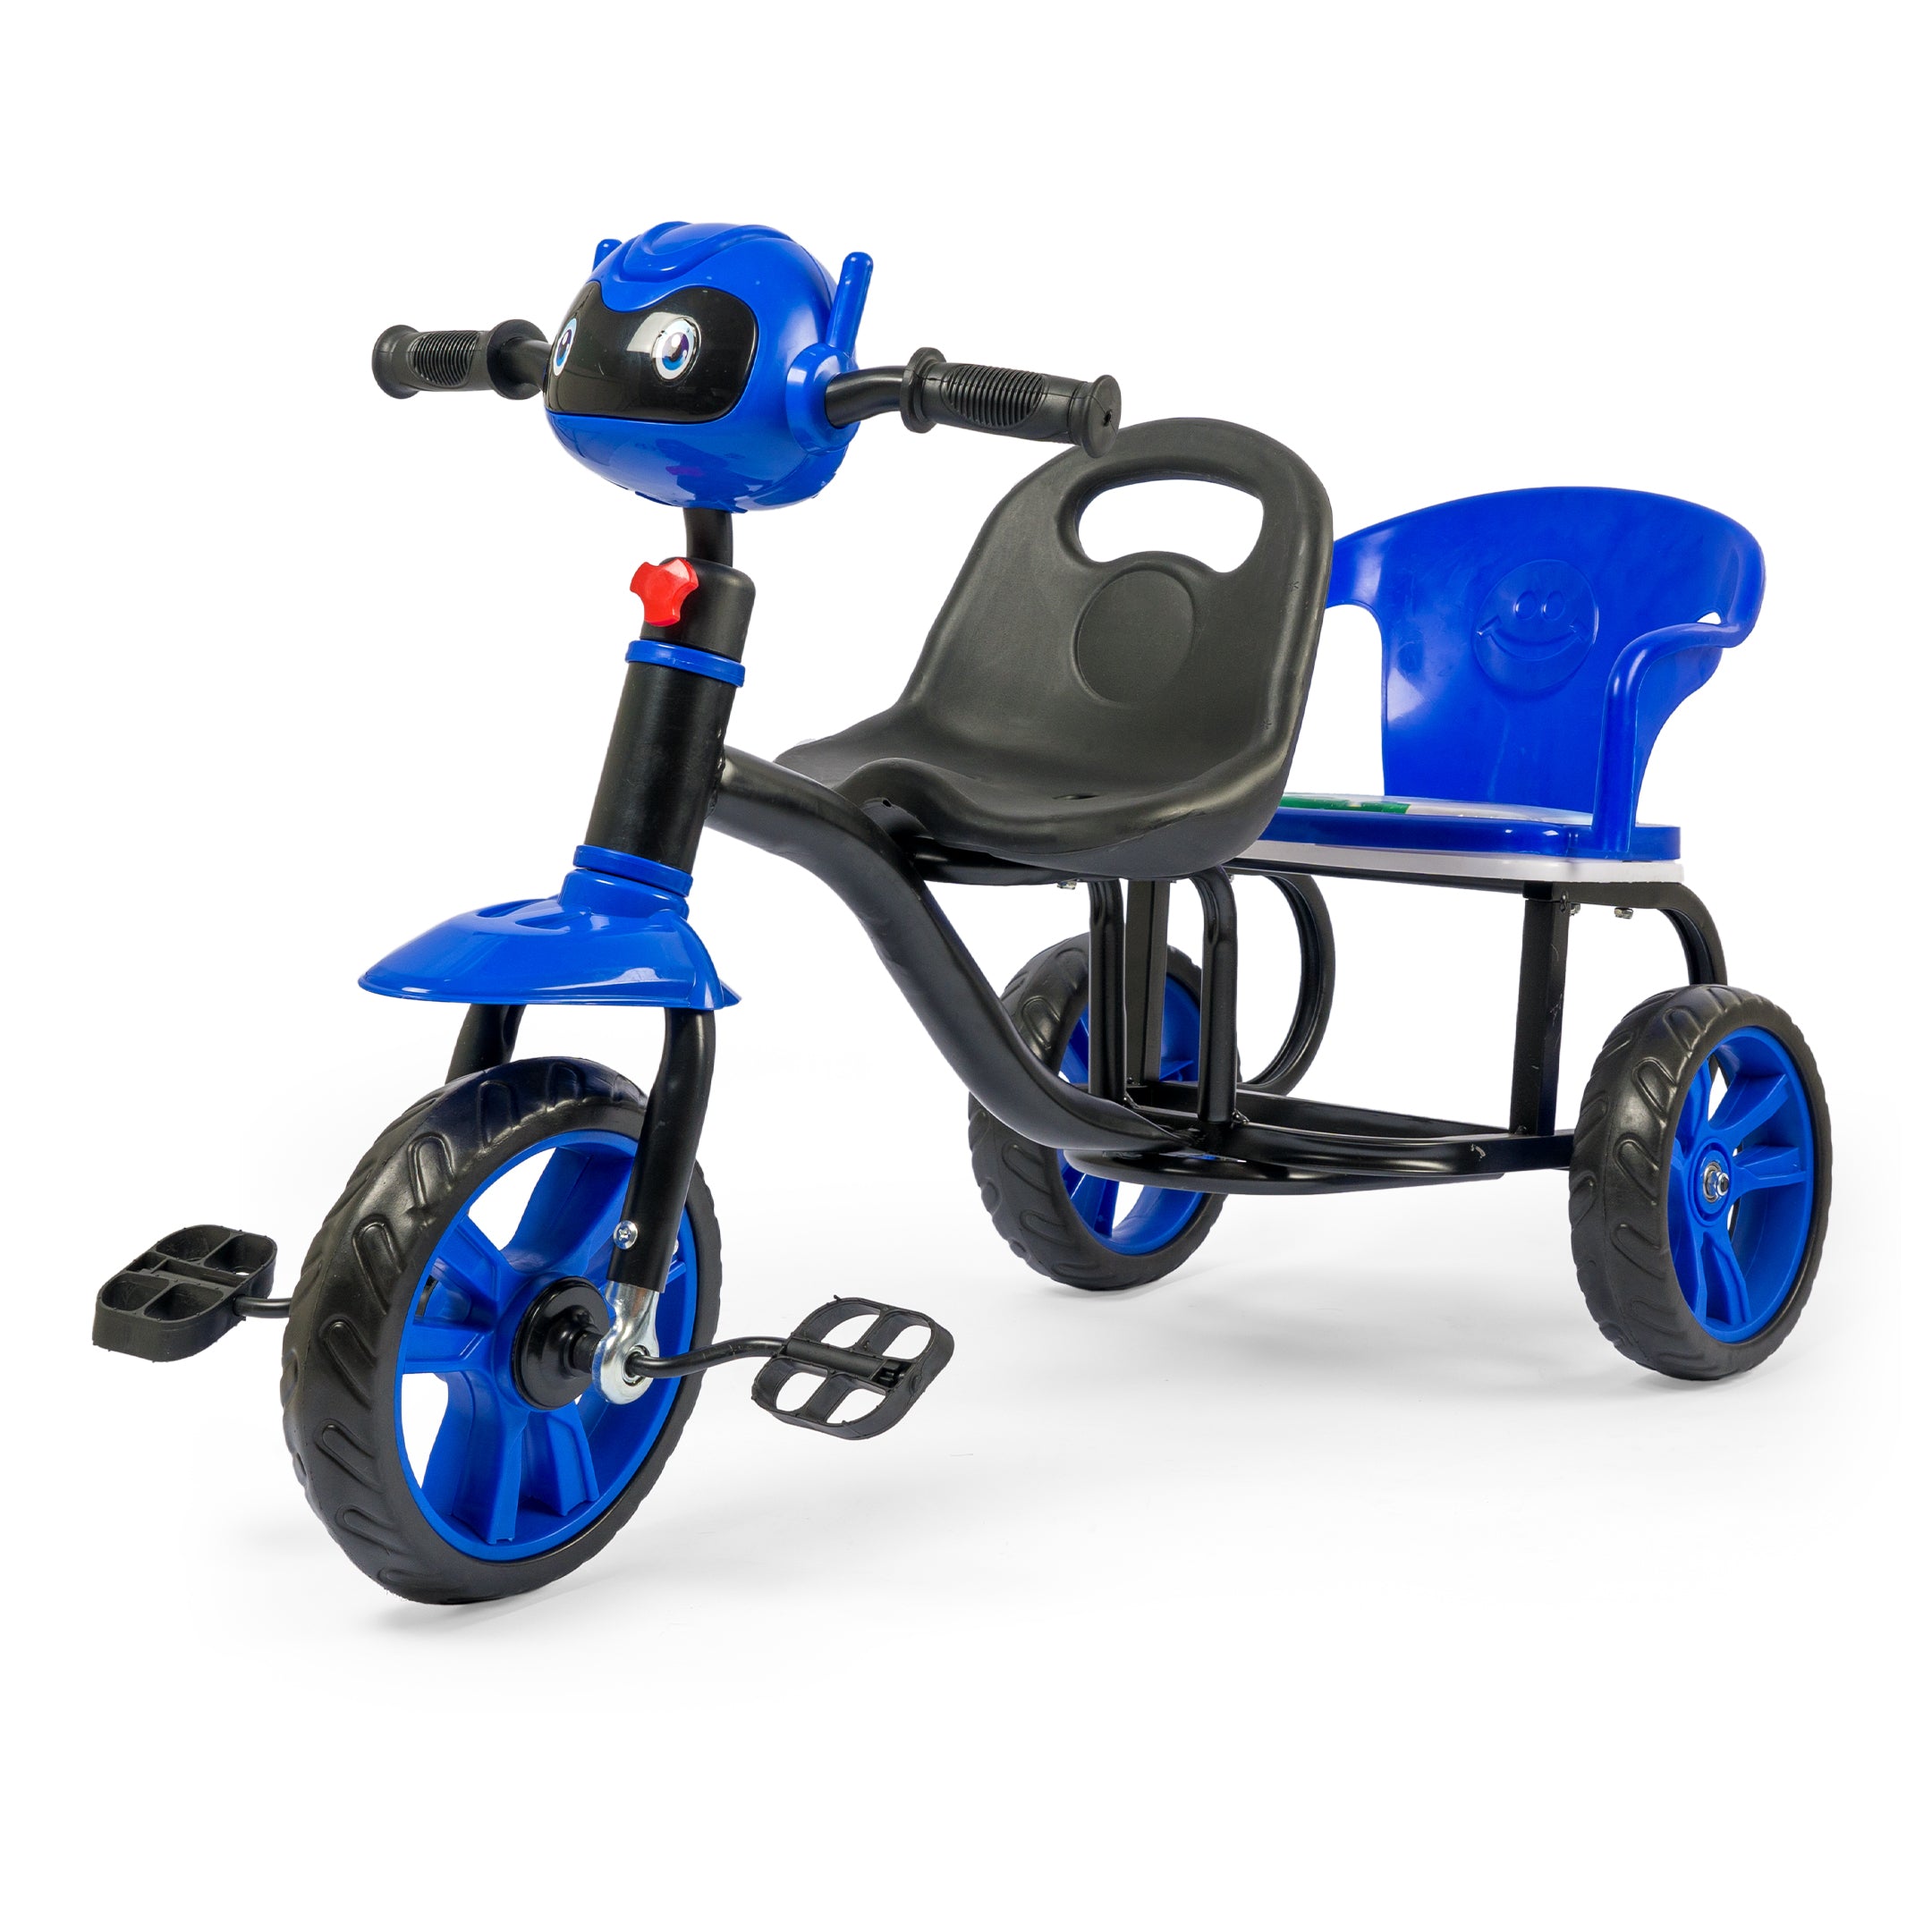 Kids Batman Twin Seater Tricycle - Blue